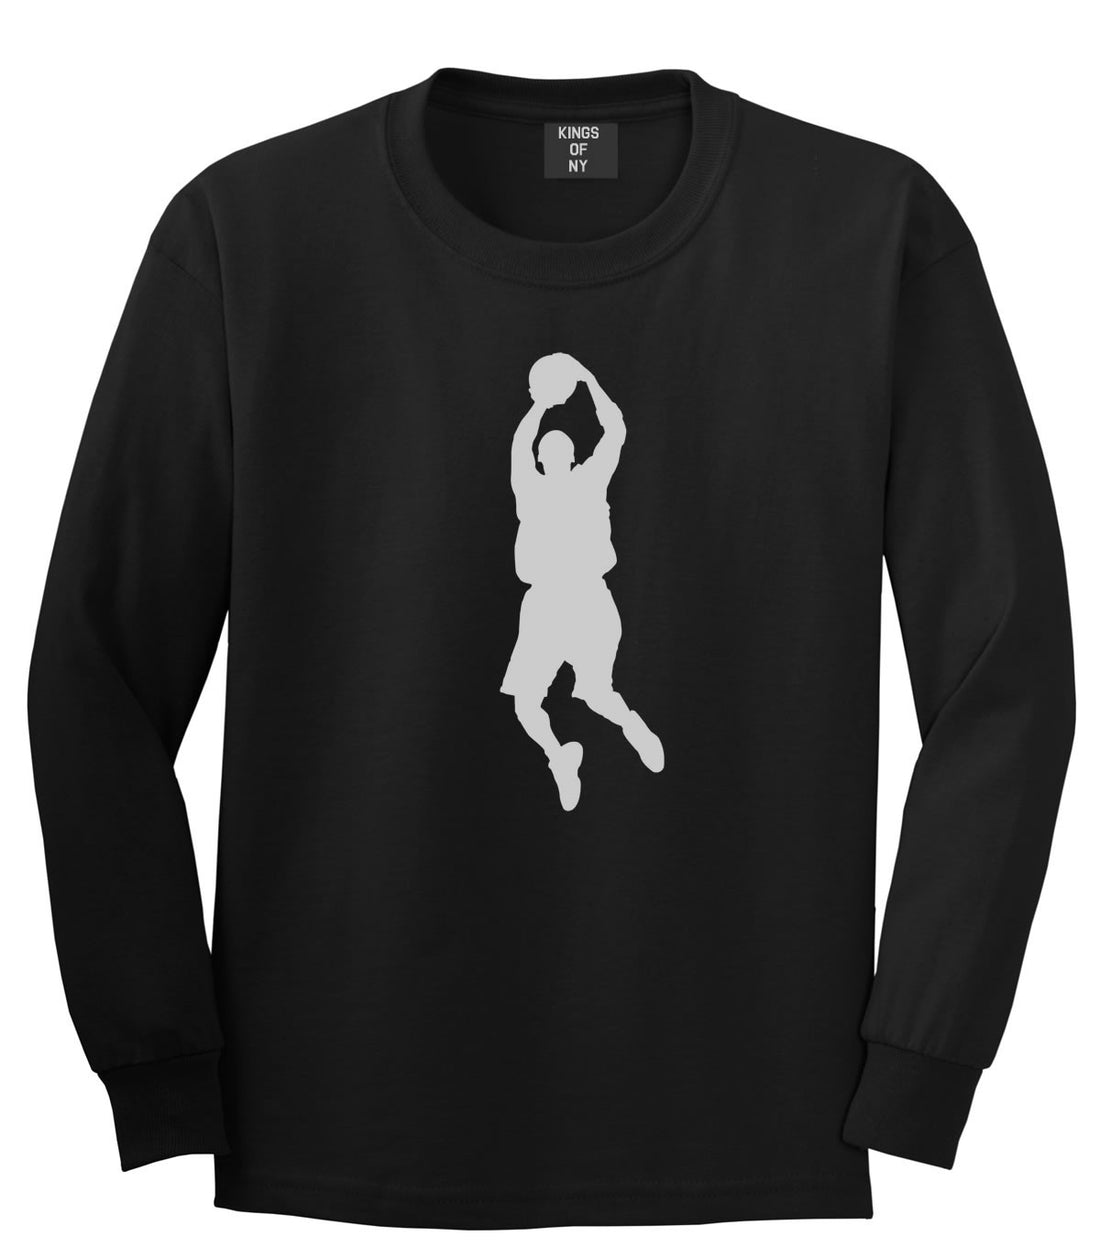 Basketball Shooter Long Sleeve T-Shirt by Kings Of NY